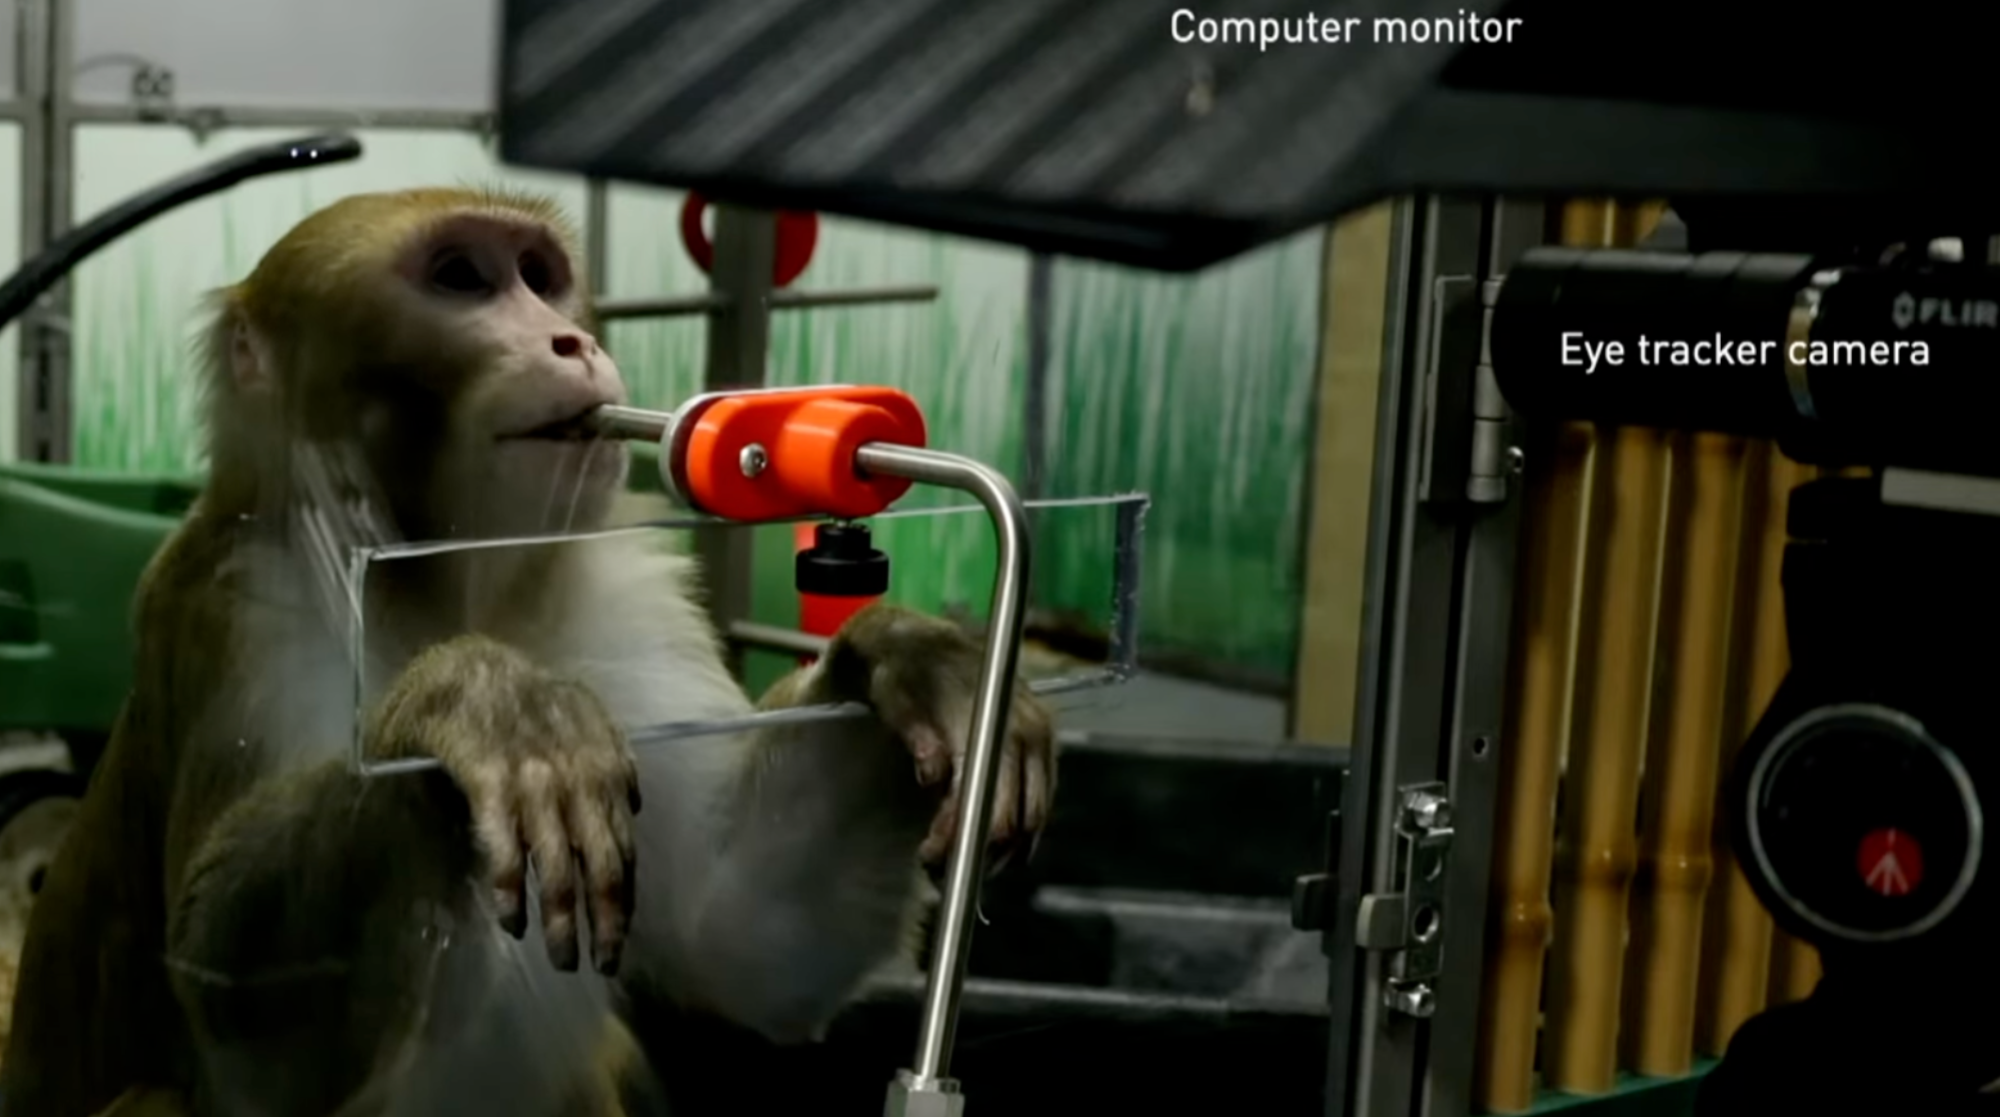 Sake, the macaque, at last week's Neuralink presentation. 